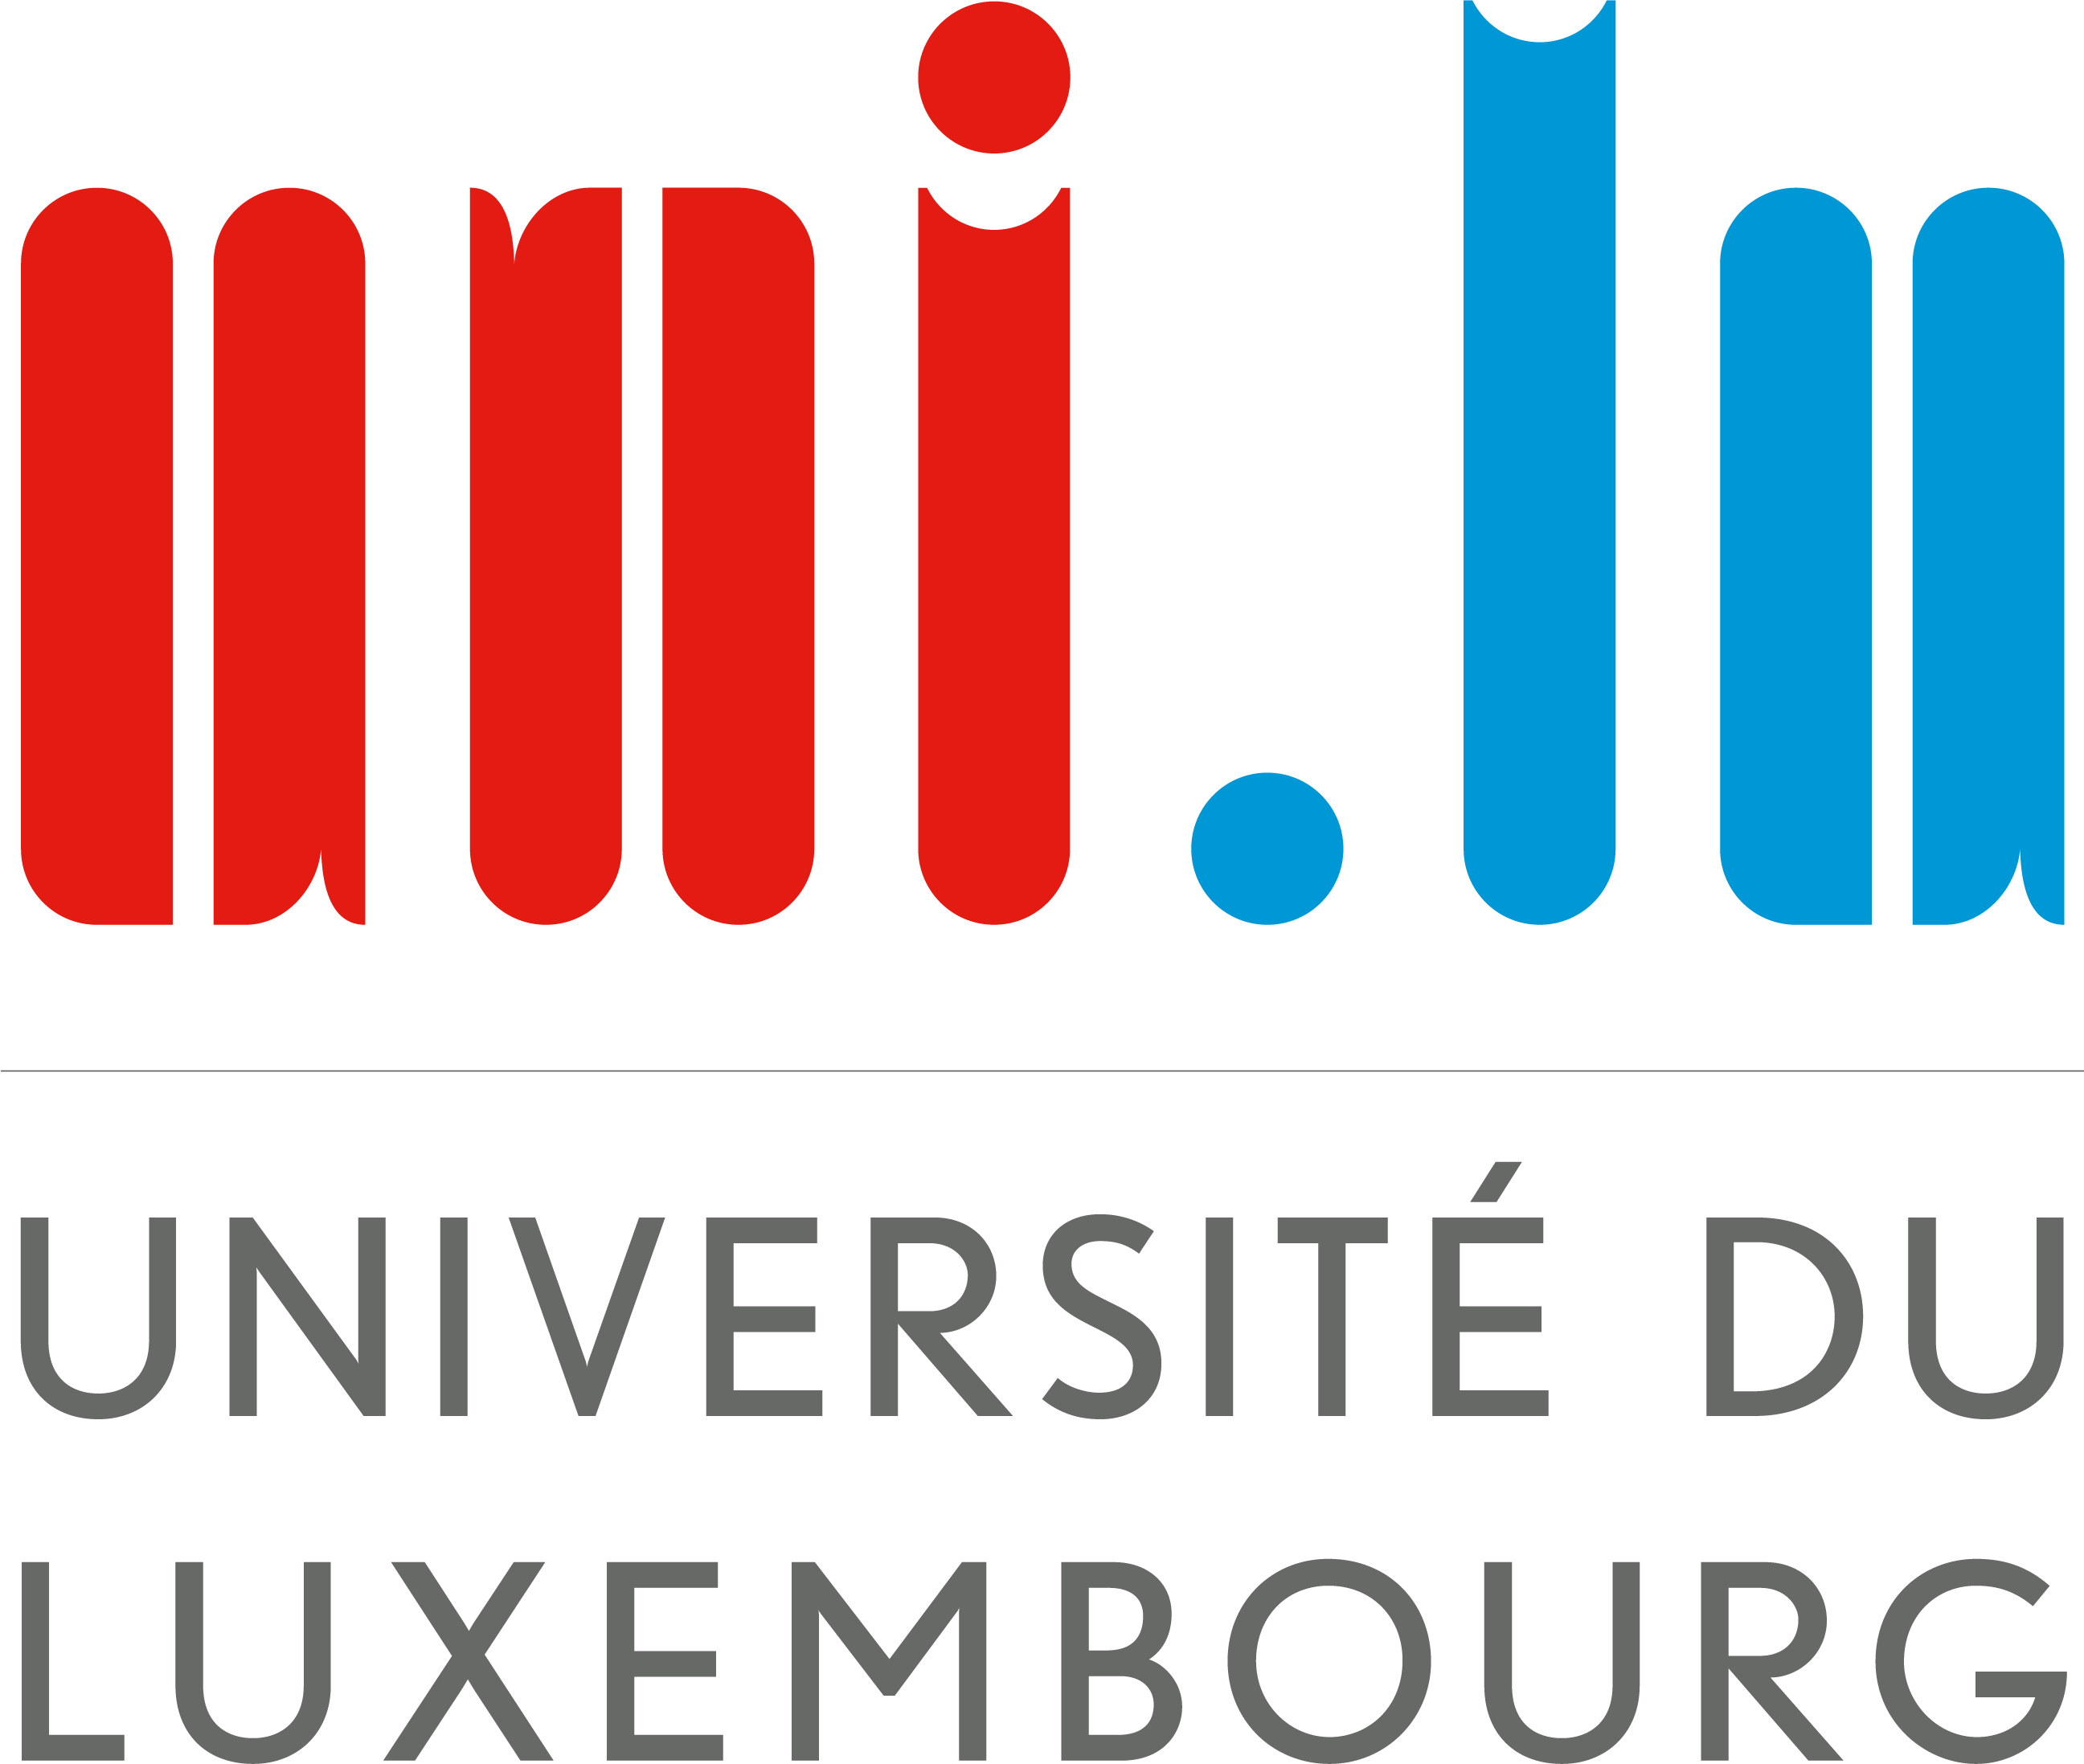 University of Luxembourg